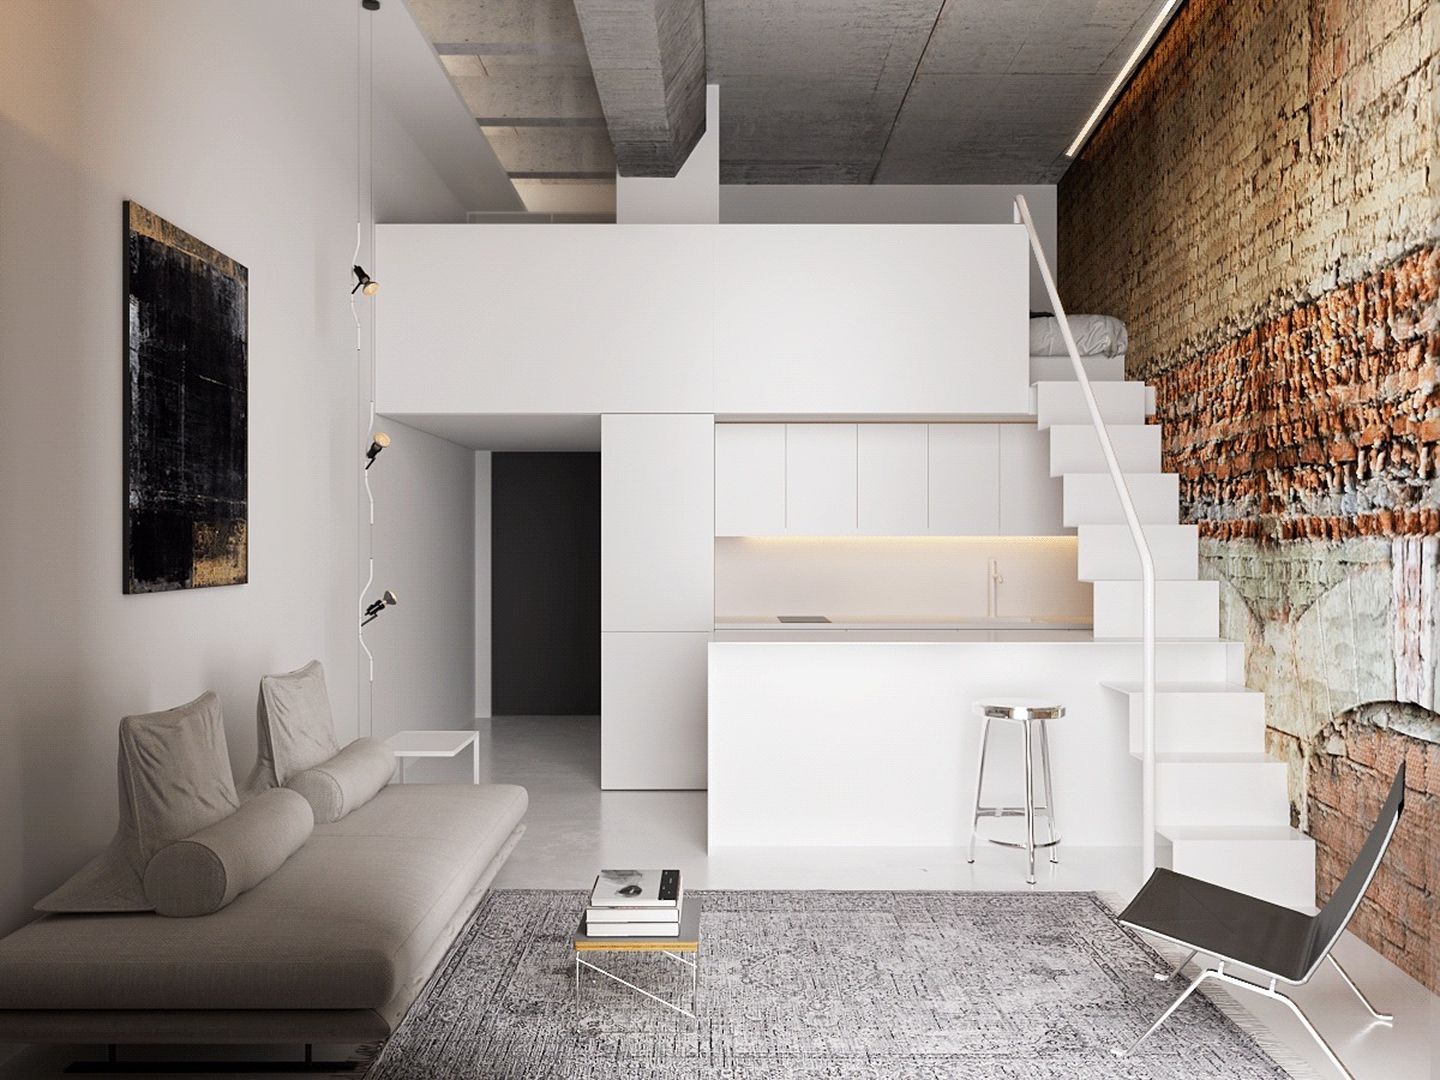 Dampak model tangga terhadap keseluruhan ruangan sangat penting dalam konsep desain minimalis.